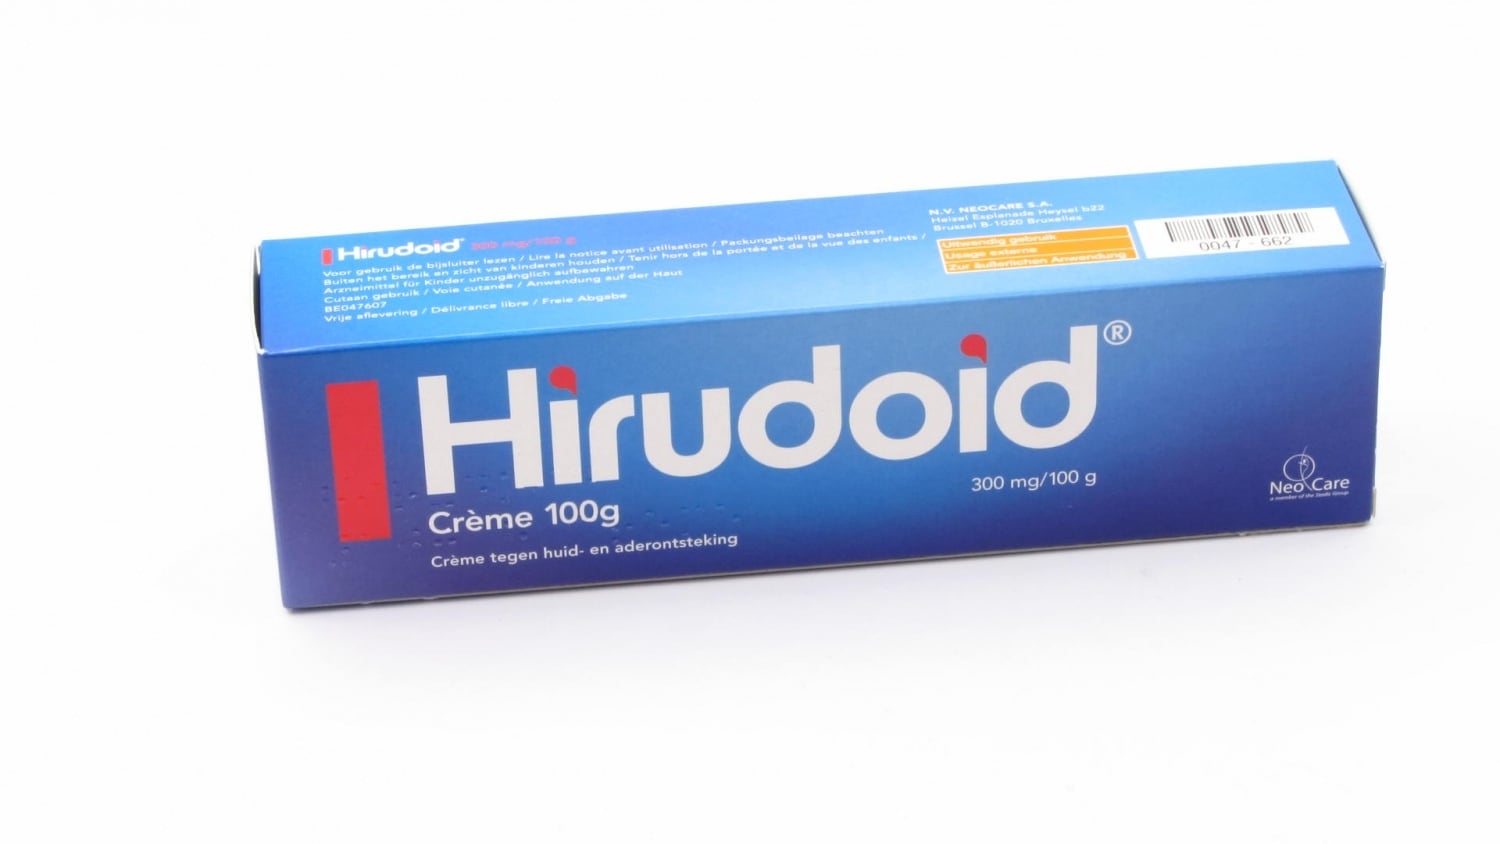 Hirudoid CrÃ¨me